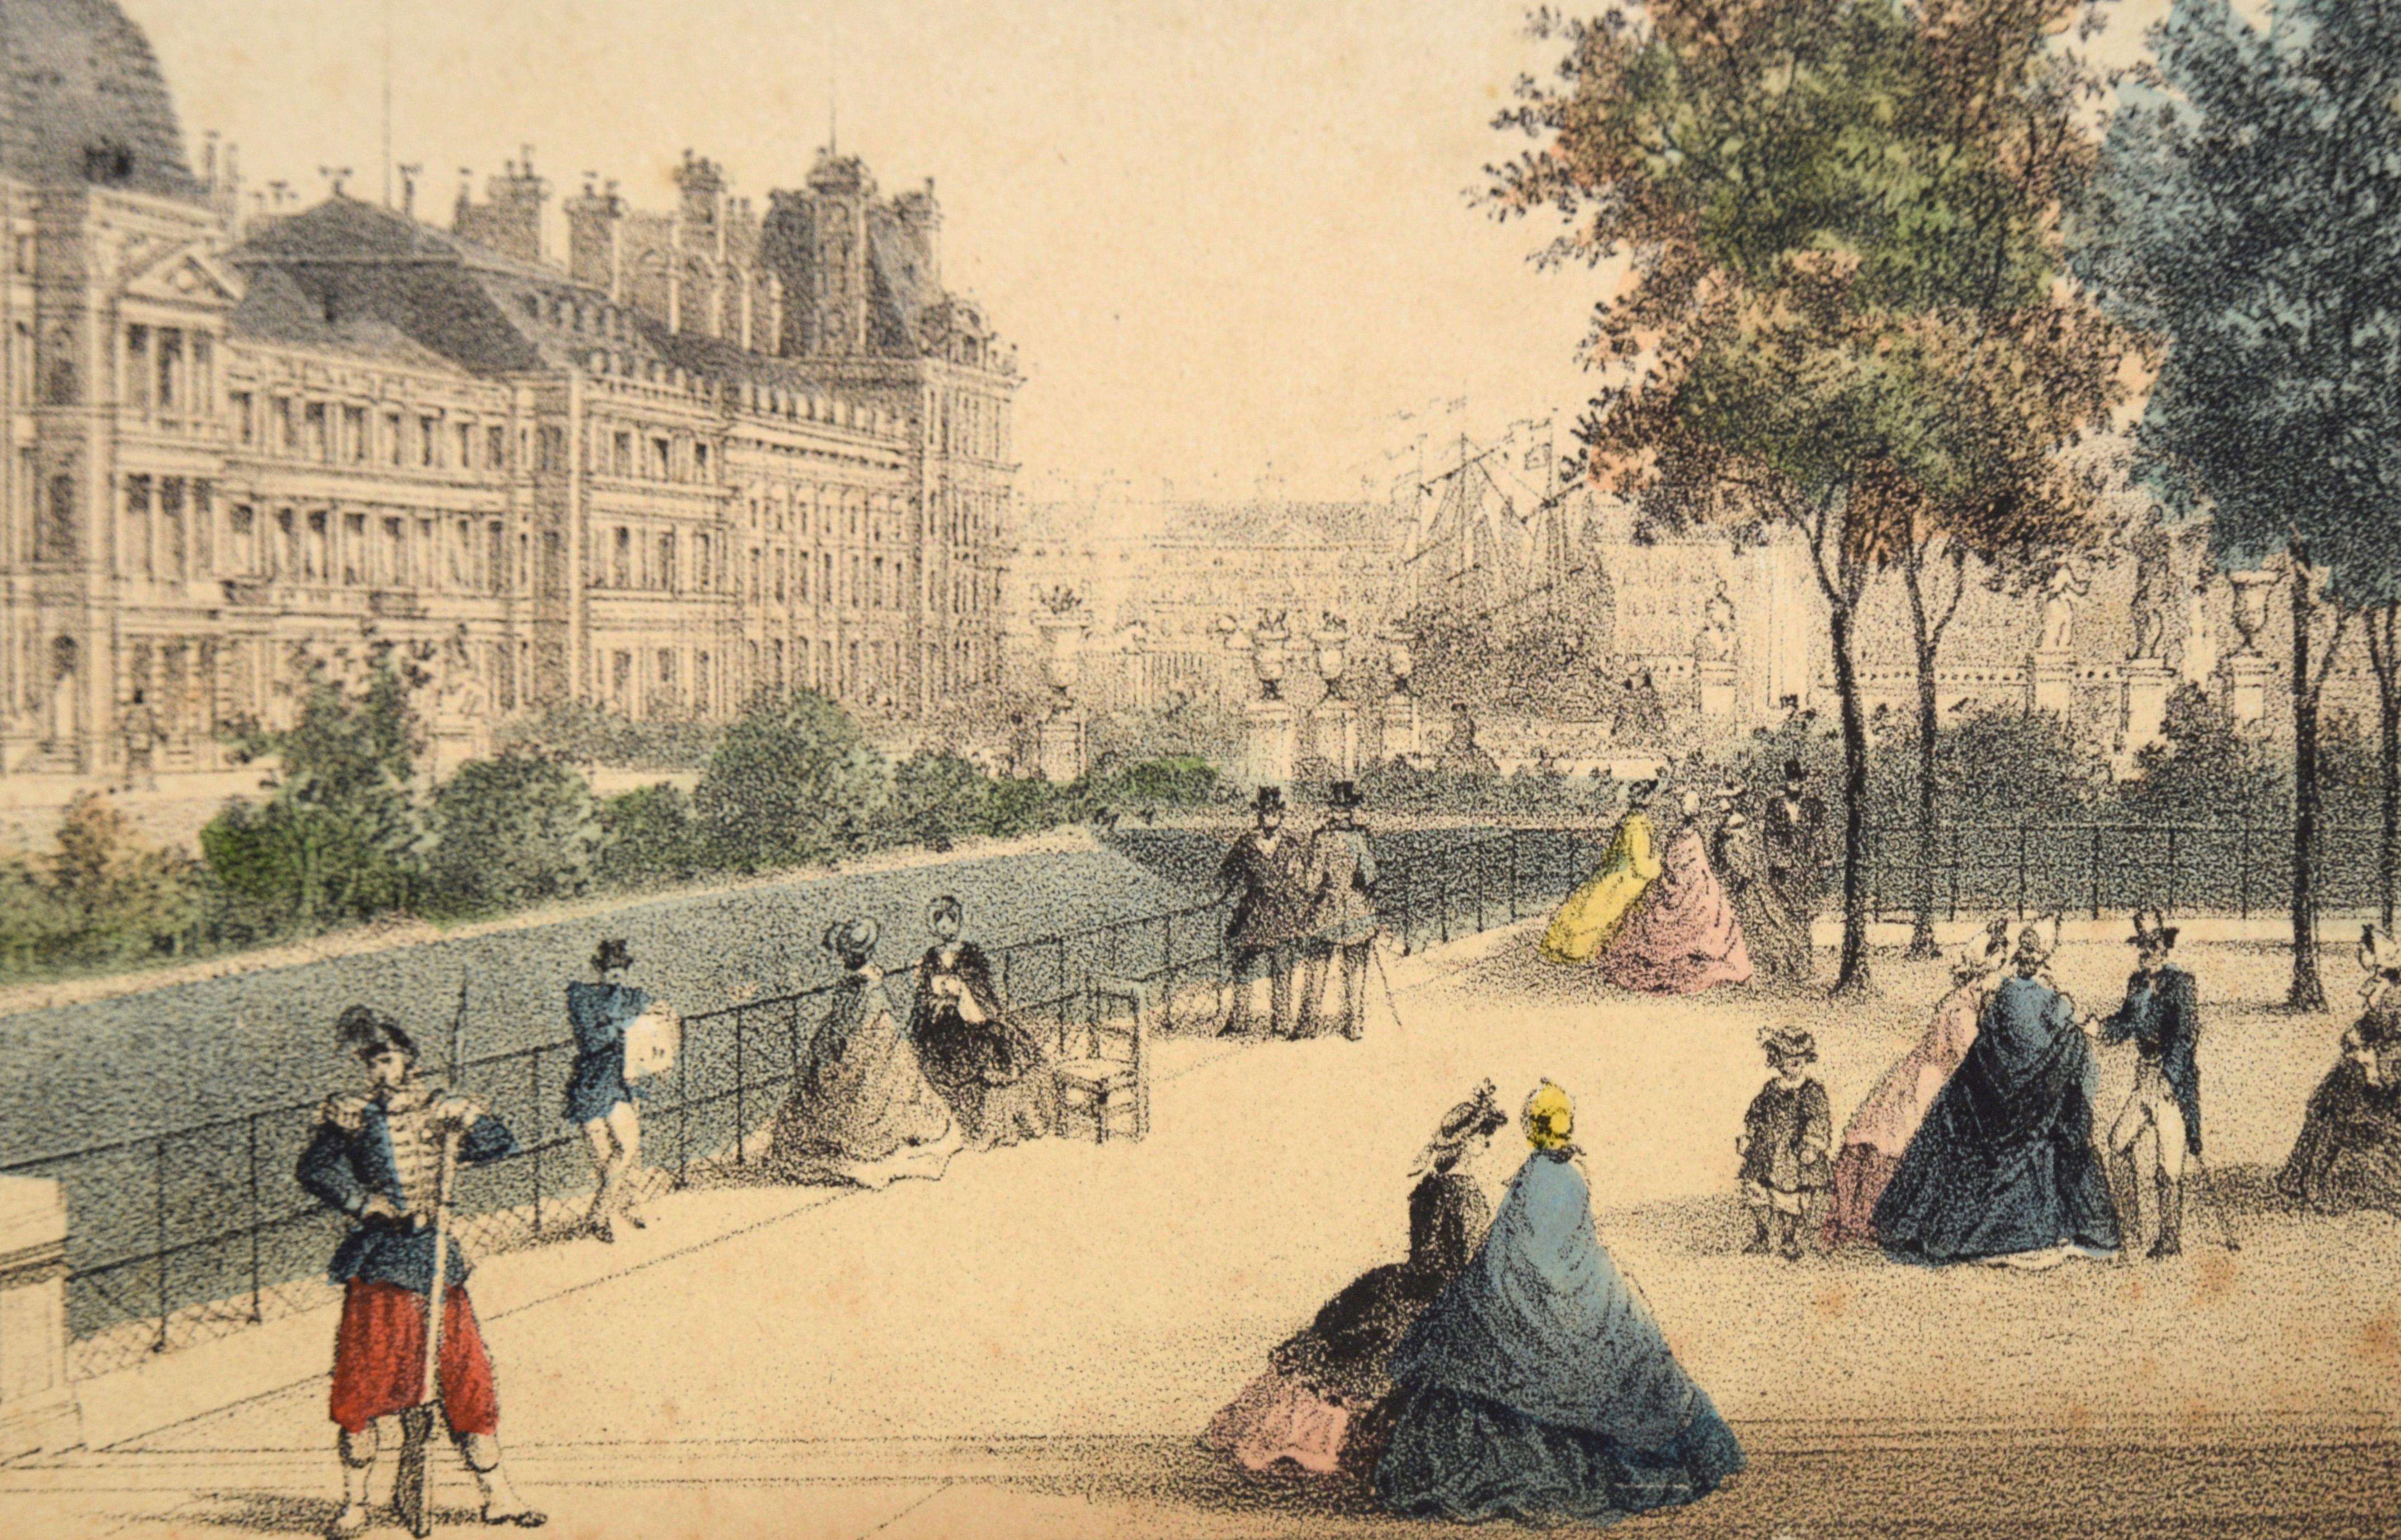 Les Tuileries, Paris - Hand Colored Lithograph 1845-1860 For Sale 1